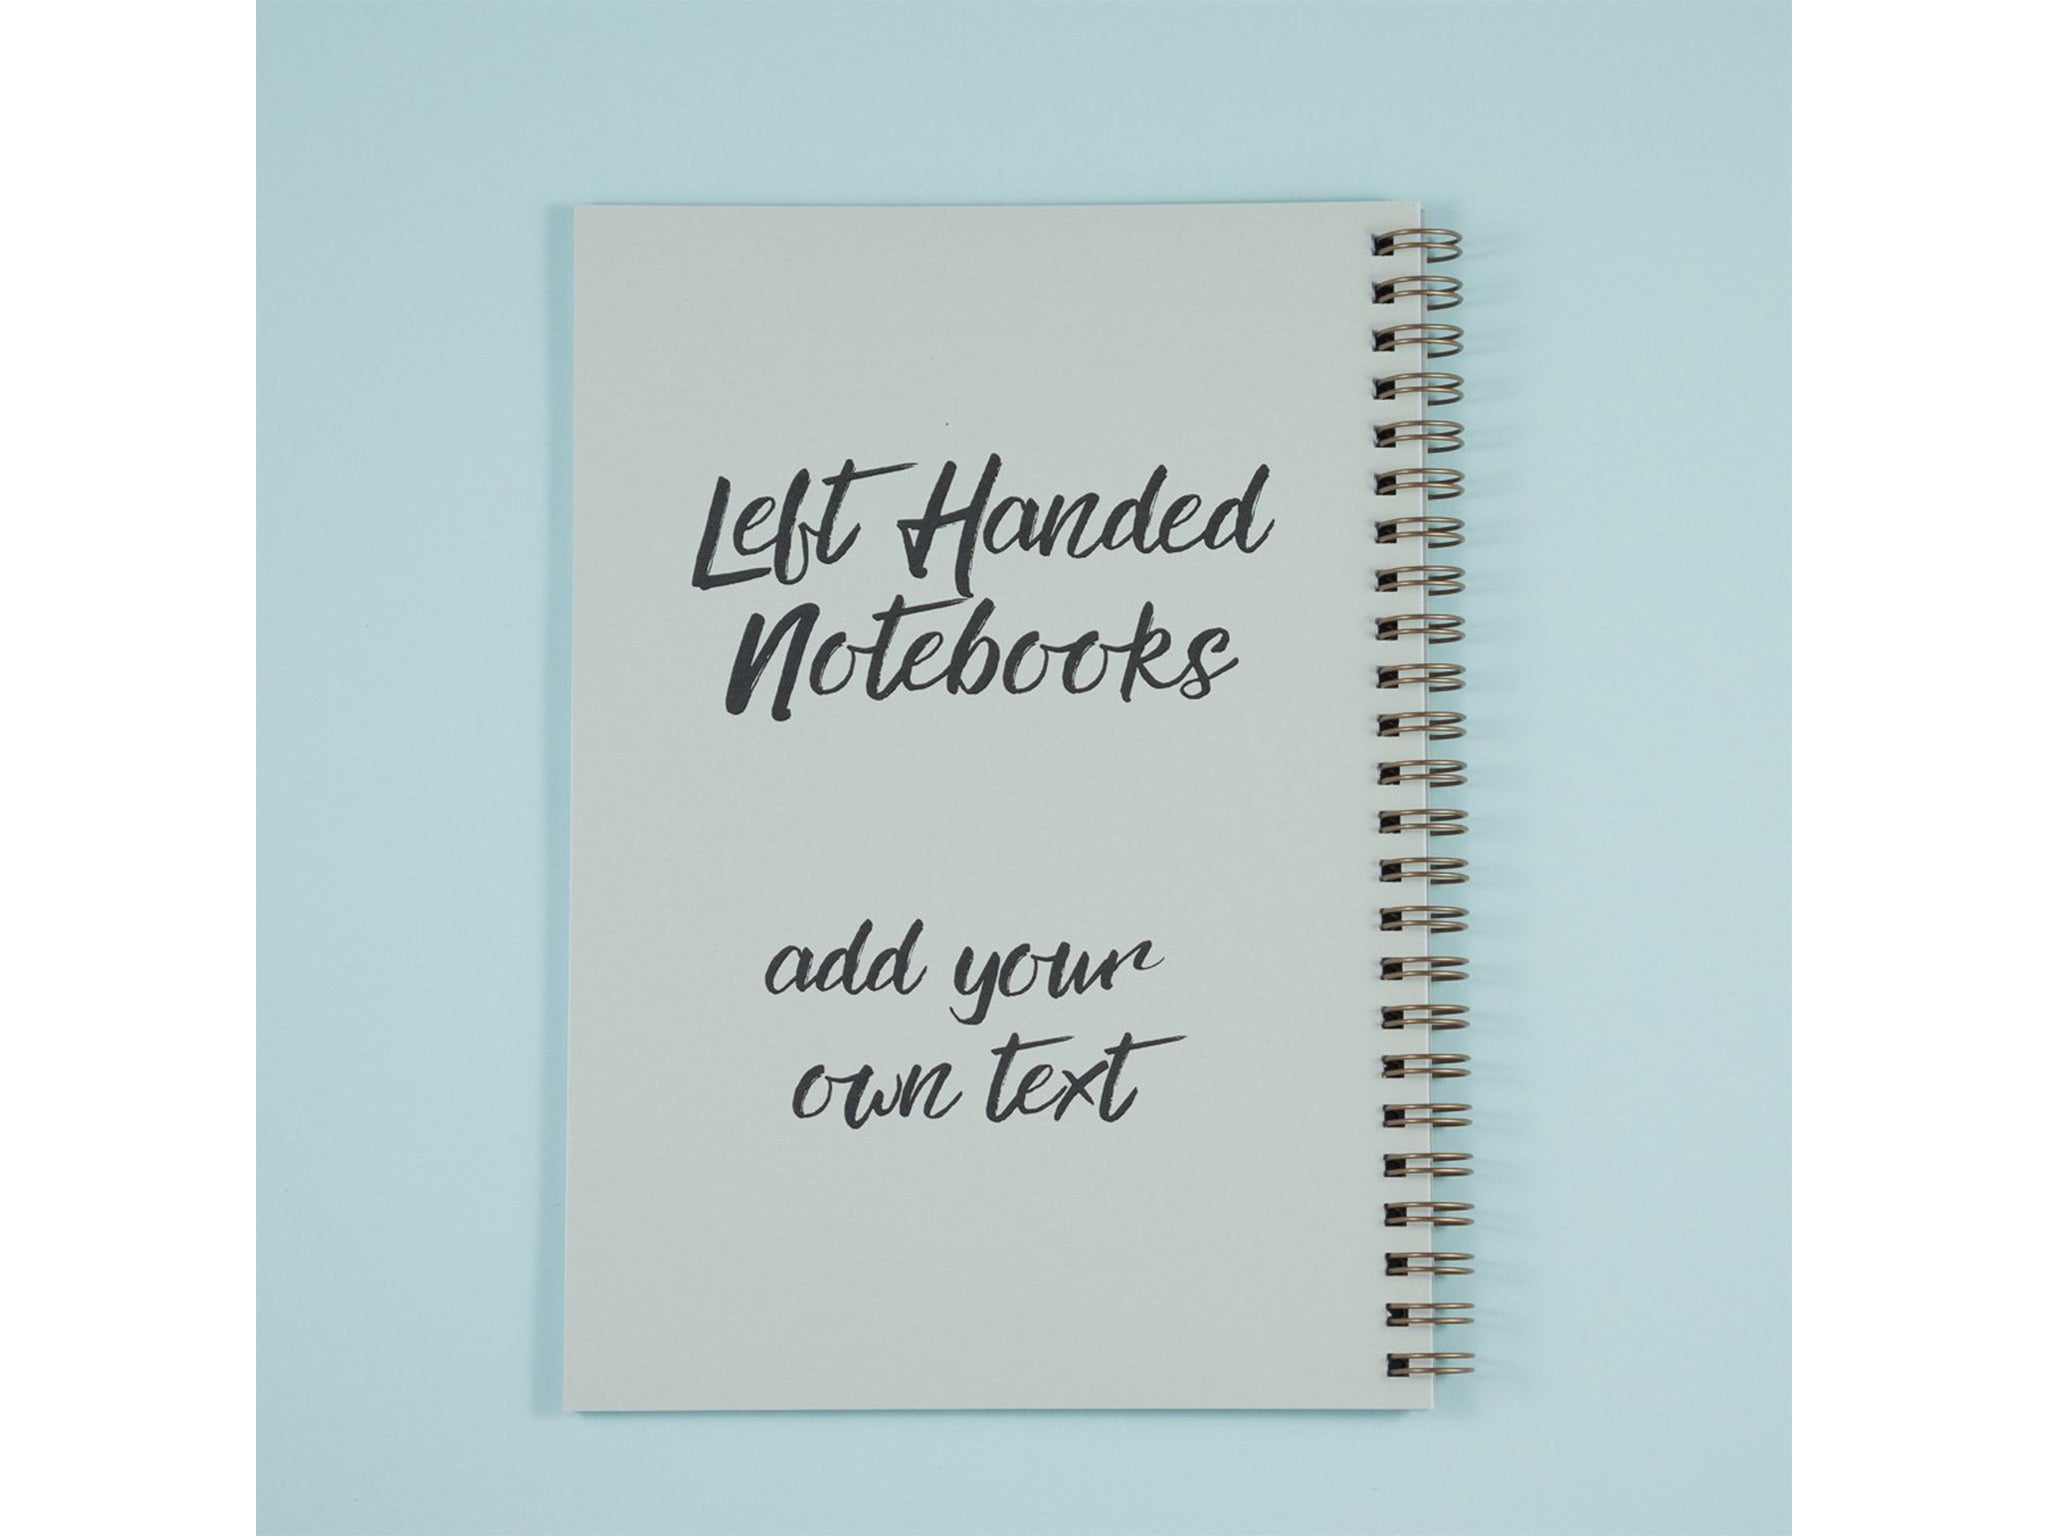 https://static.independent.co.uk/s3fs-public/thumbnails/image/2020/08/13/11/left-handed-notebook.jpg